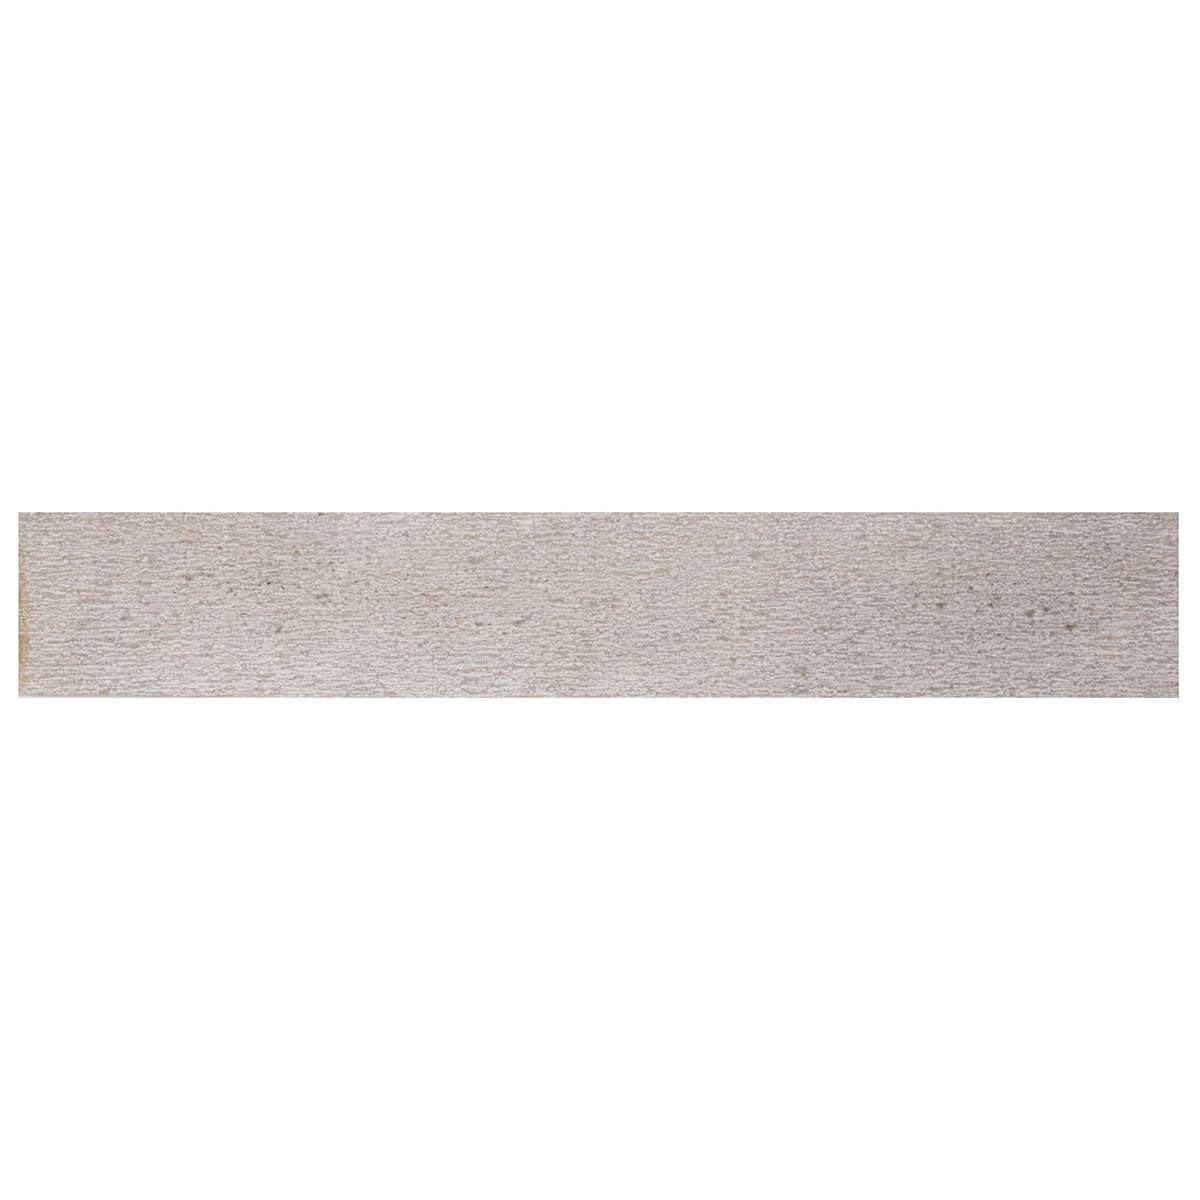 haussmann london grey limestone rectangle natural stone field tile 4x24 linen